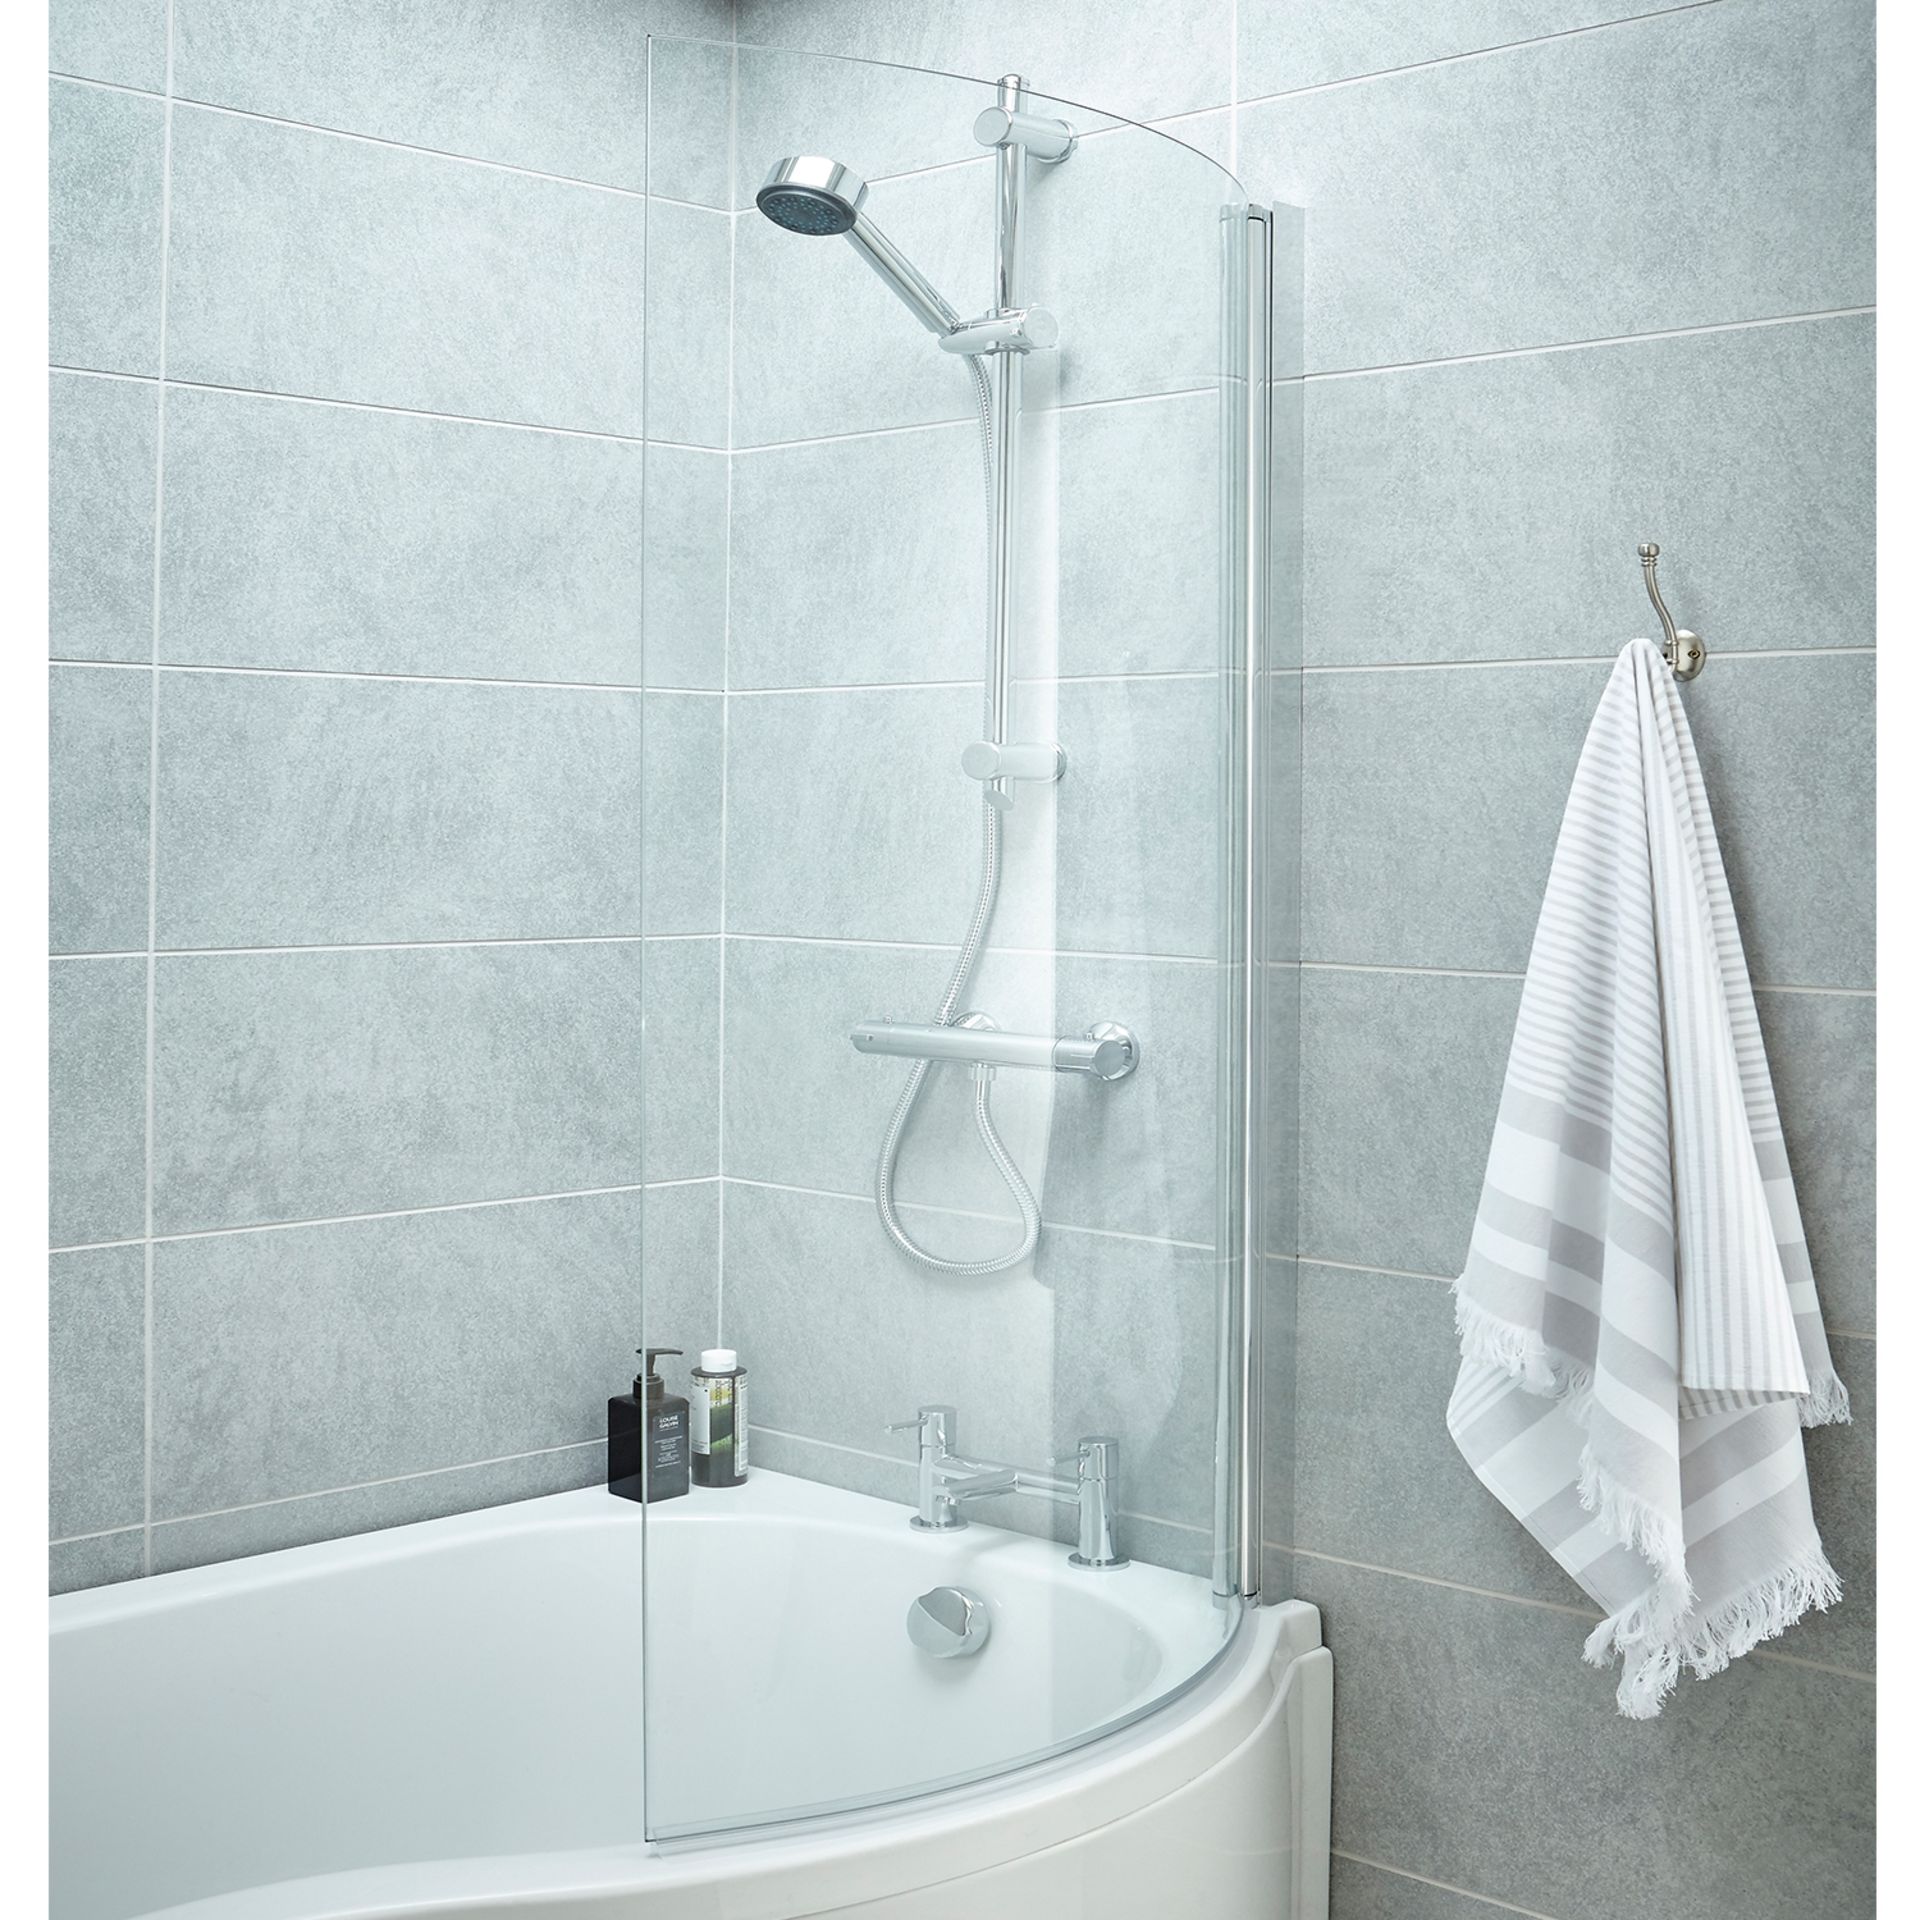 1 x Bath Shower Screen RRP £157.99 - Model Name - Tranquil